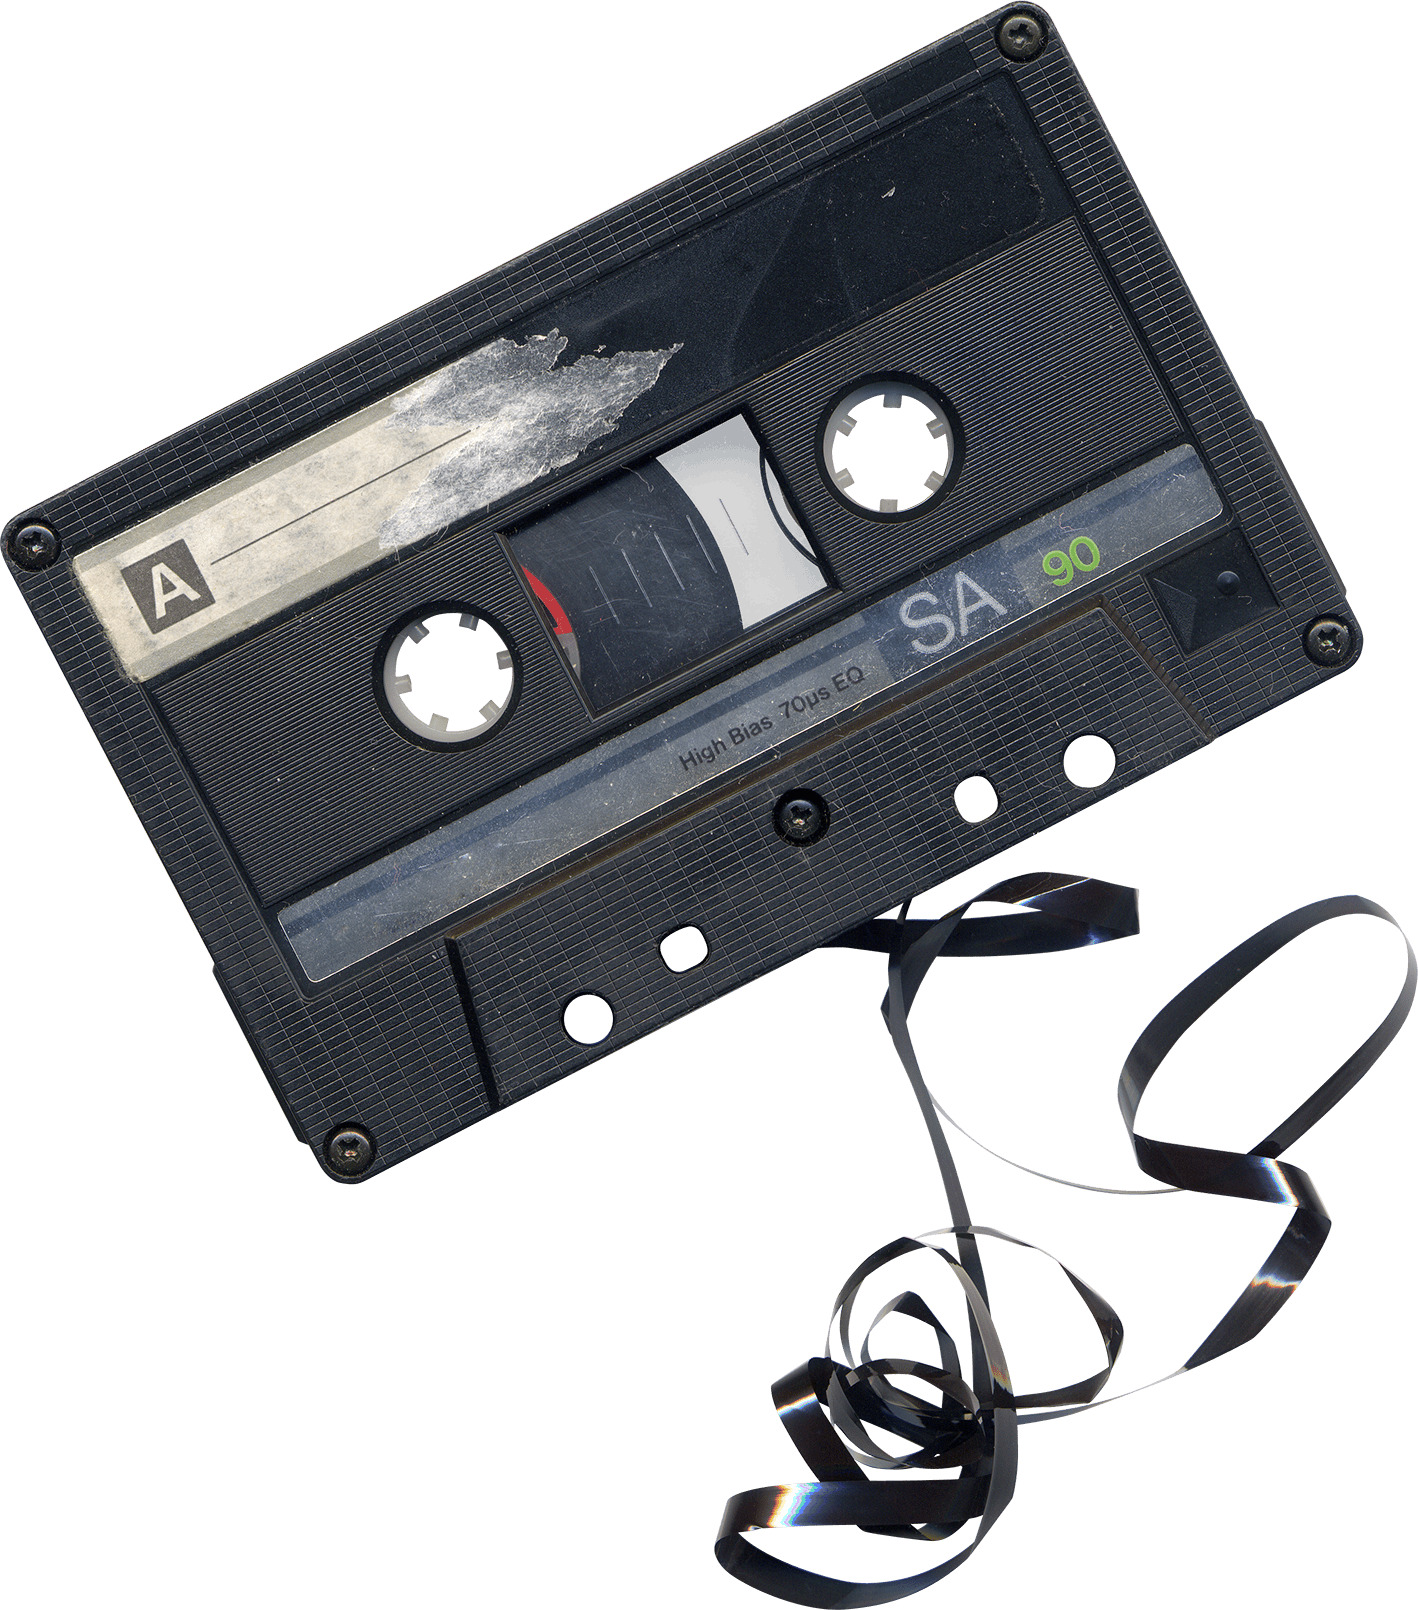 Damaged Audio Cassette icons